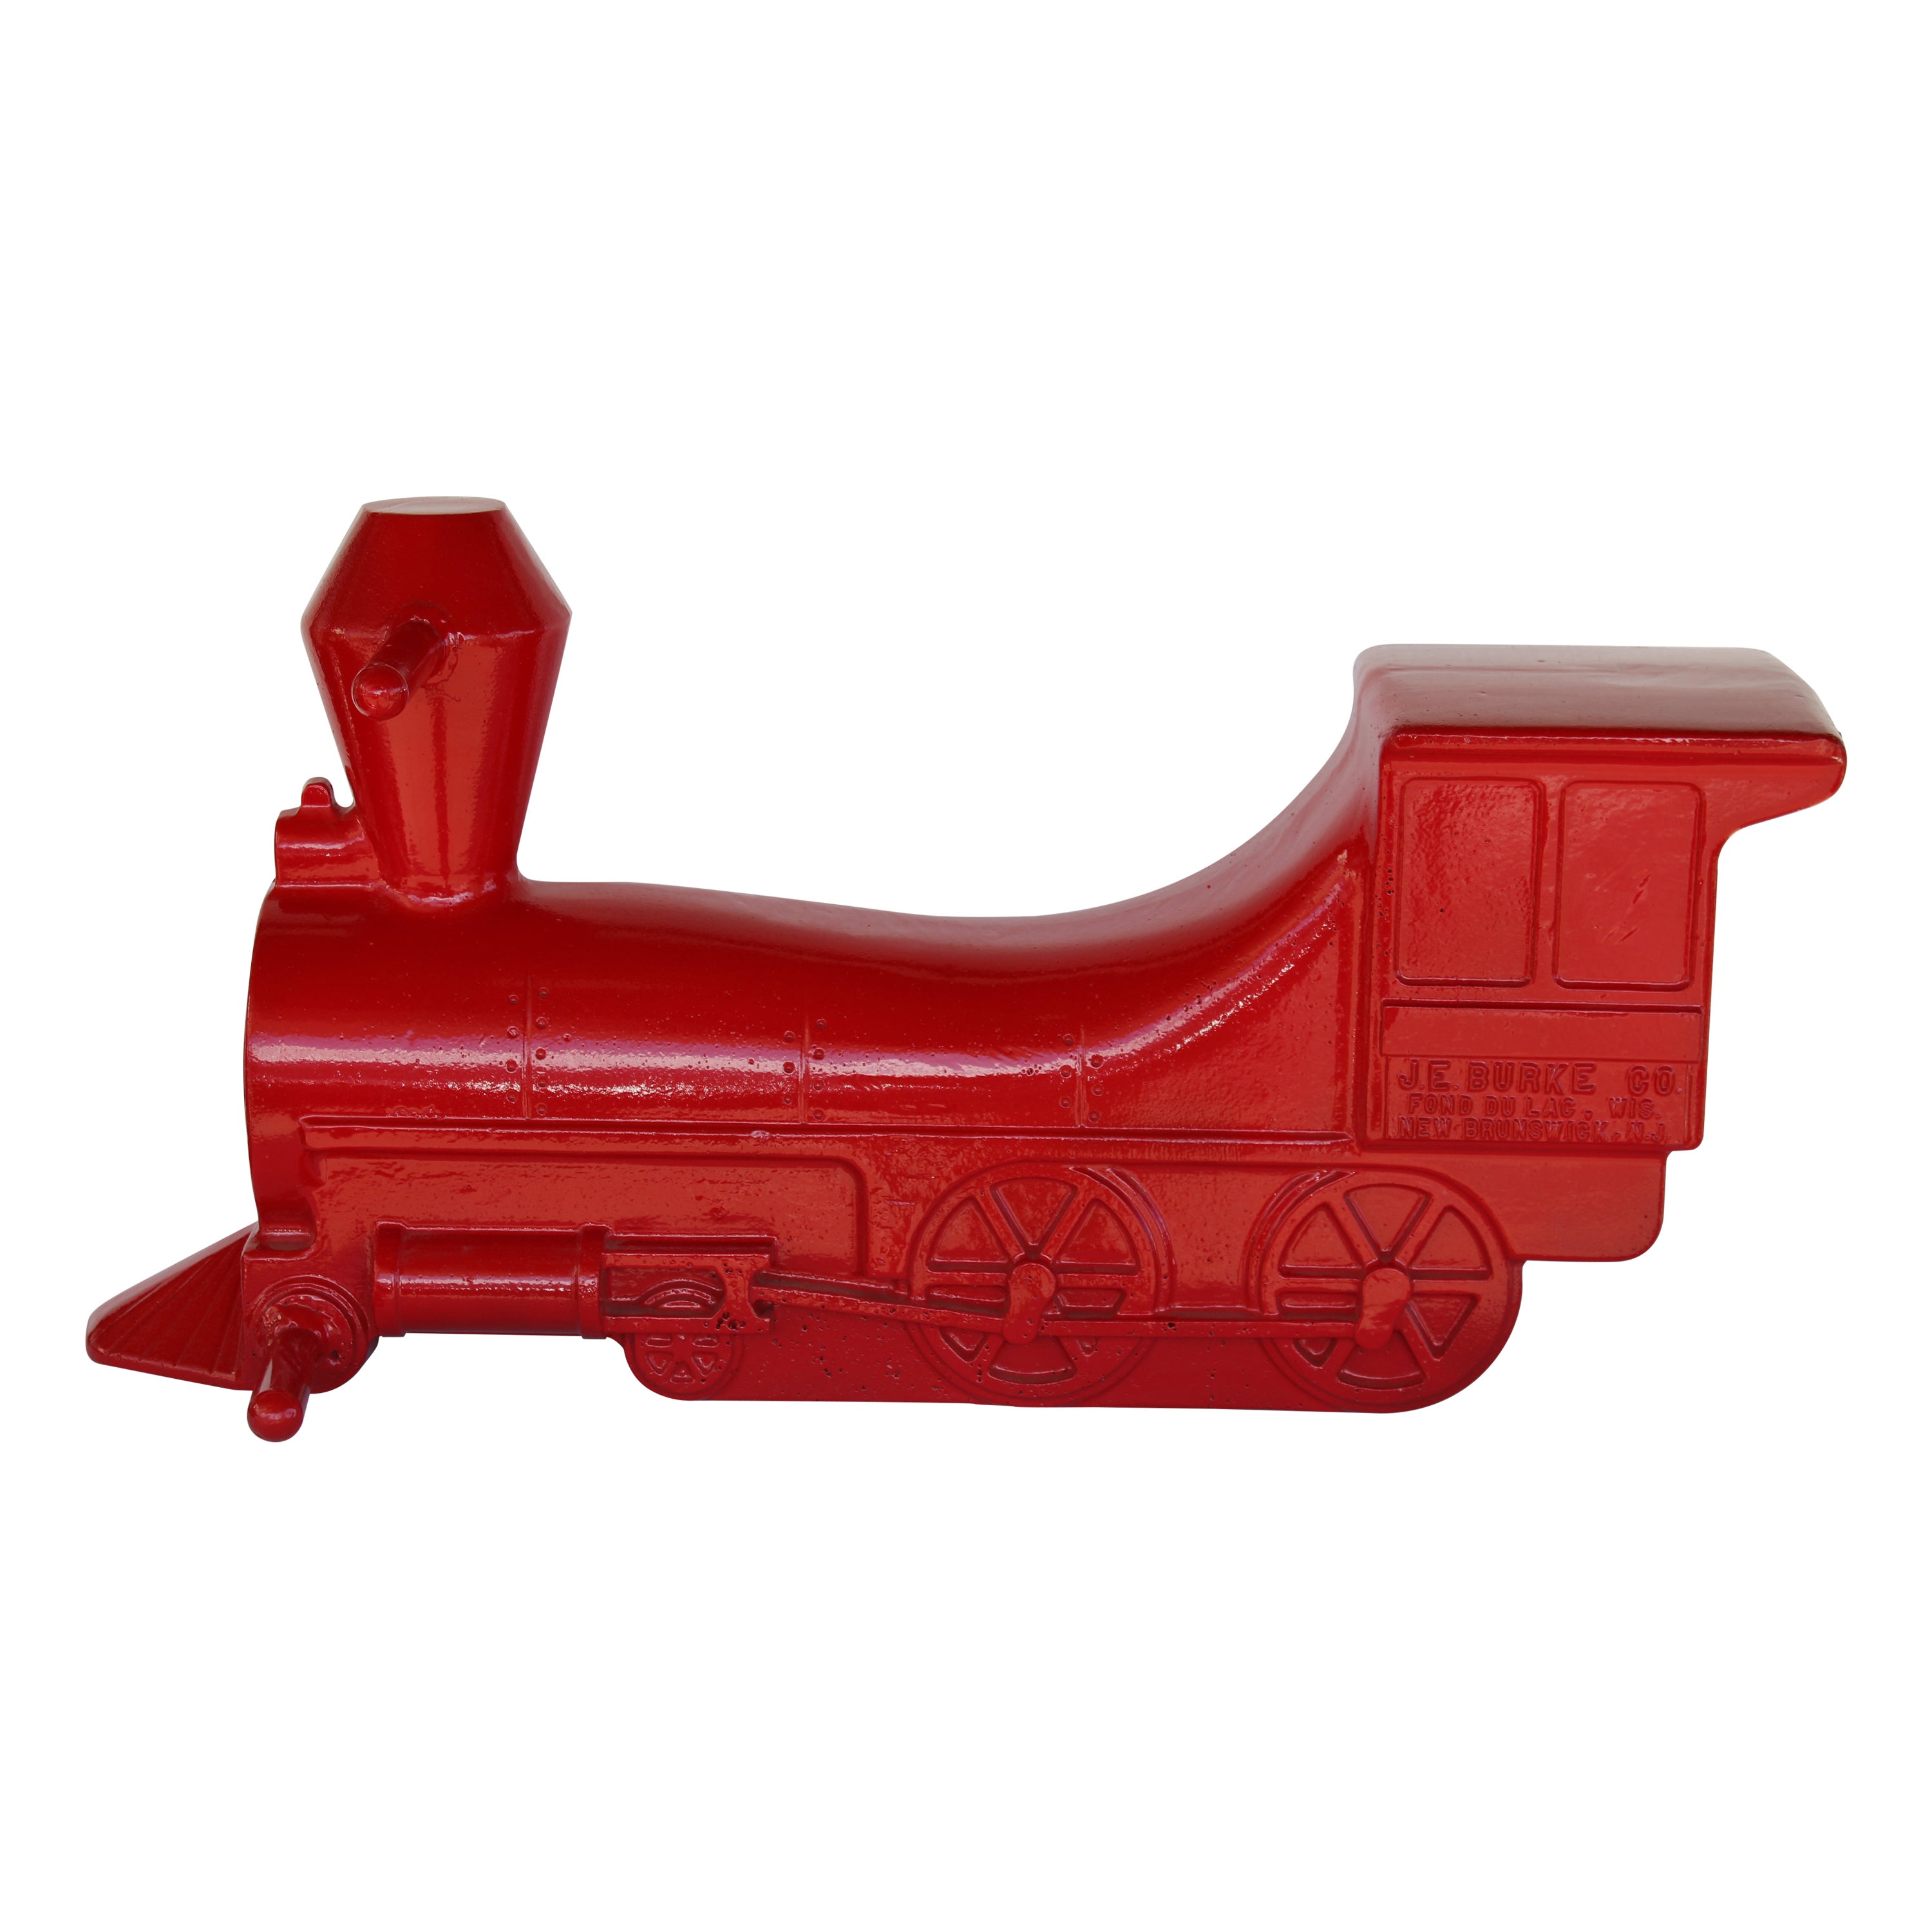 Aluminum Red Locomotive Playground Toy Sculpture For Sale